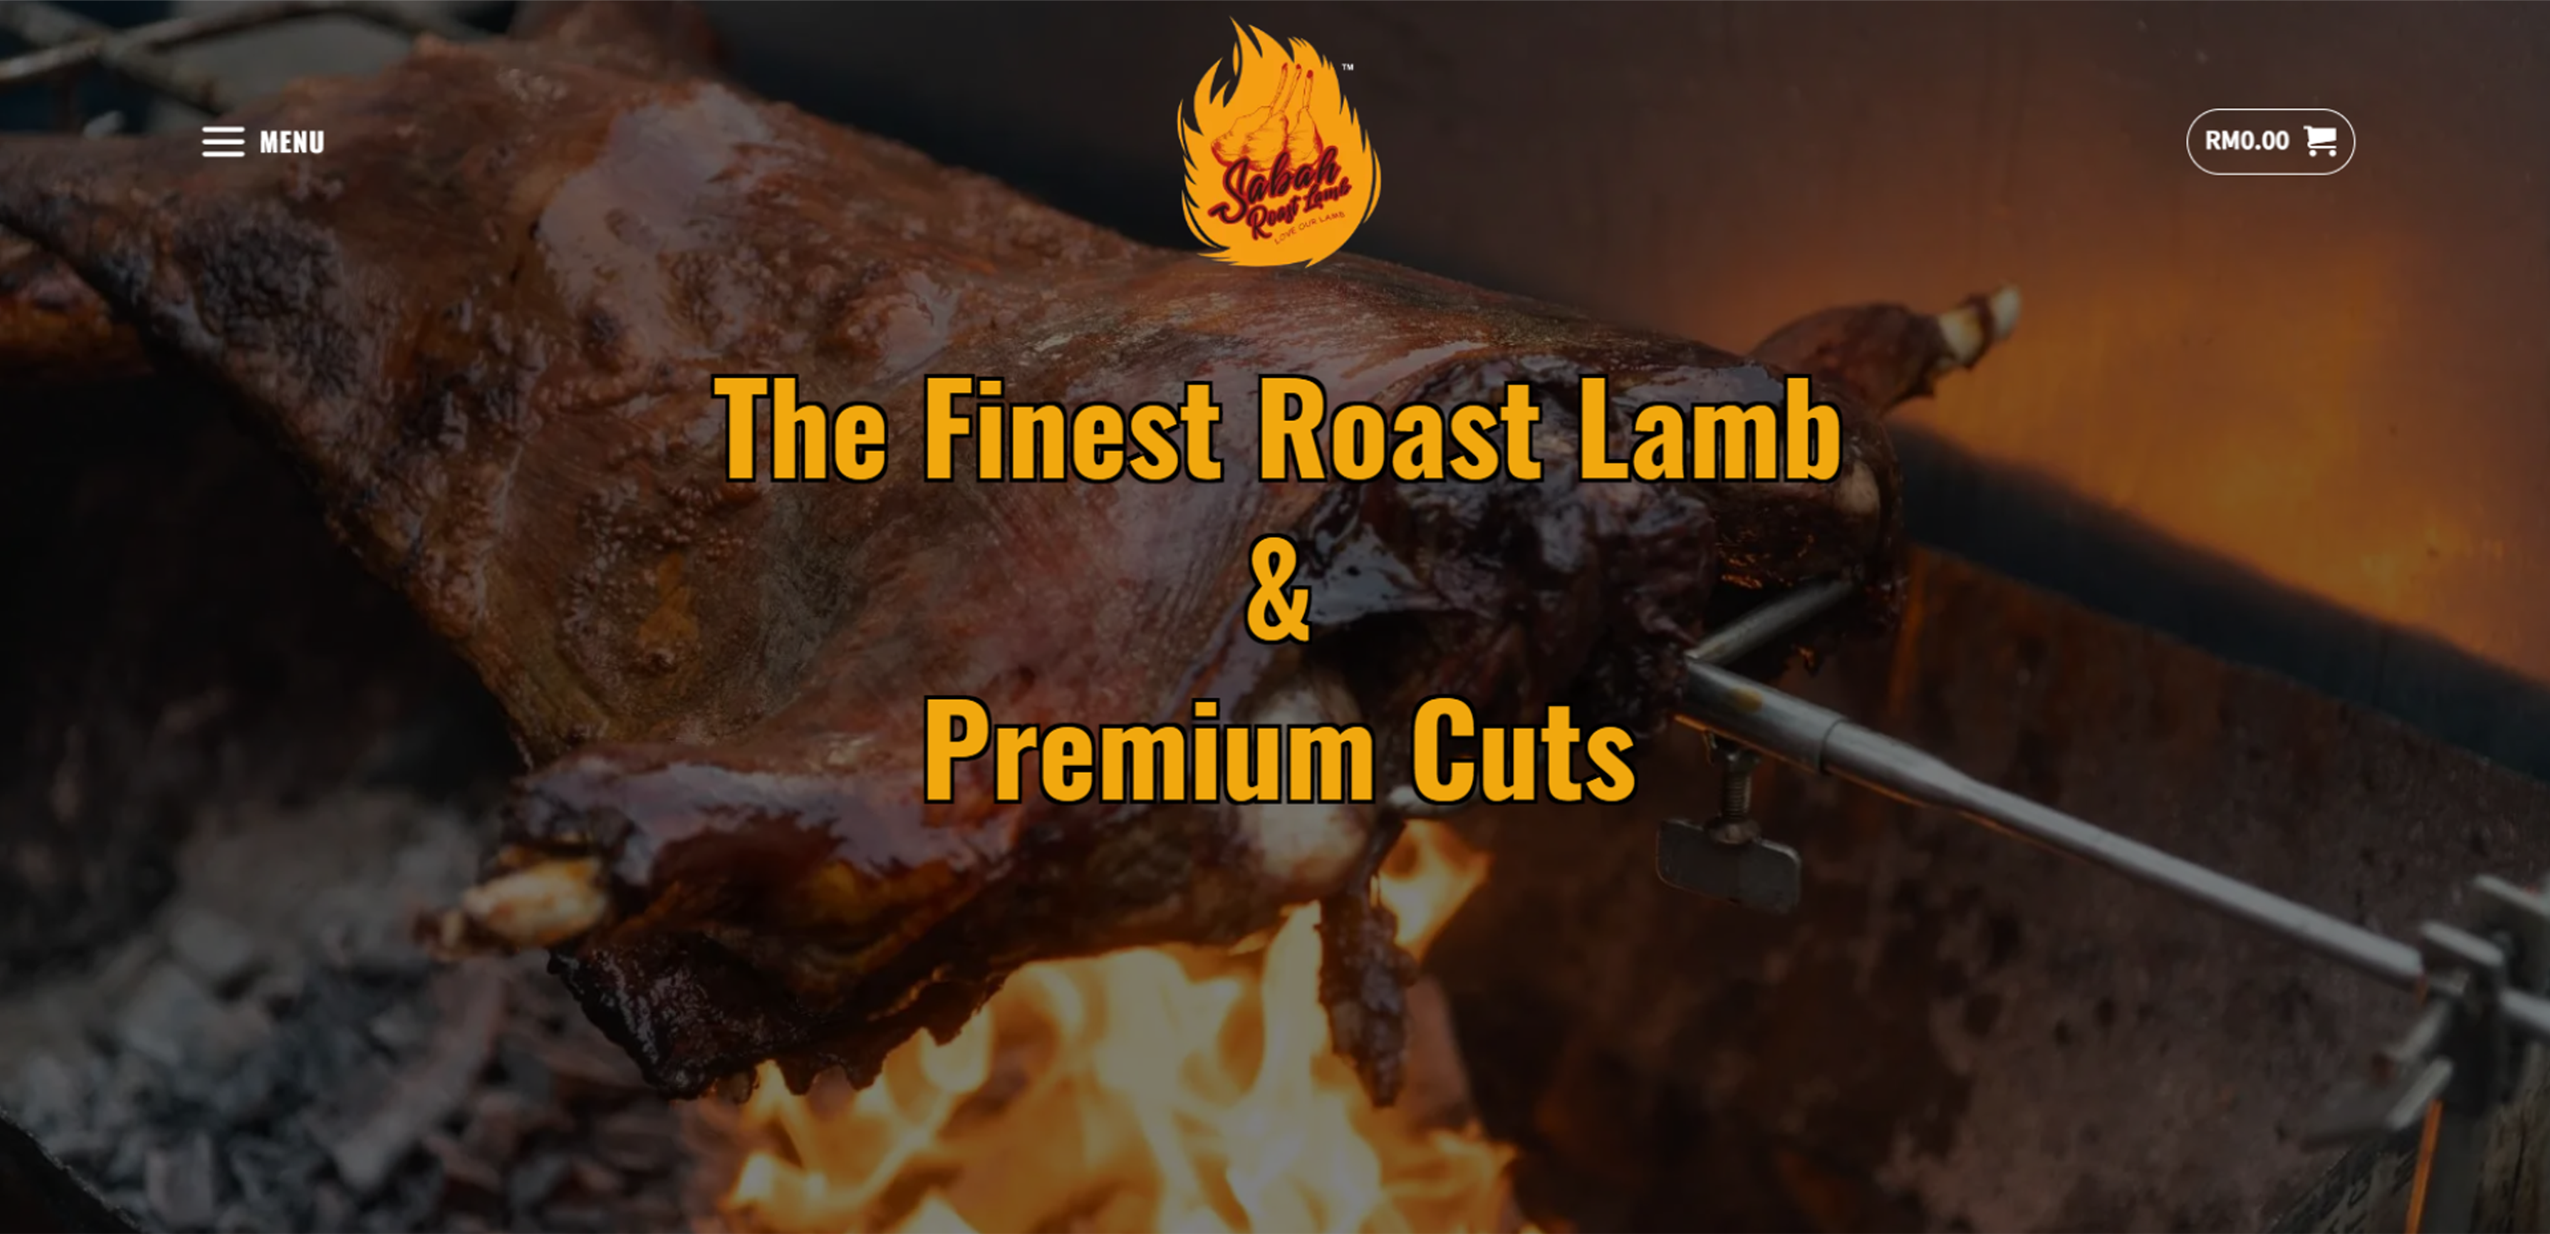 Sscreenshot of Sabah Roast Lamb website